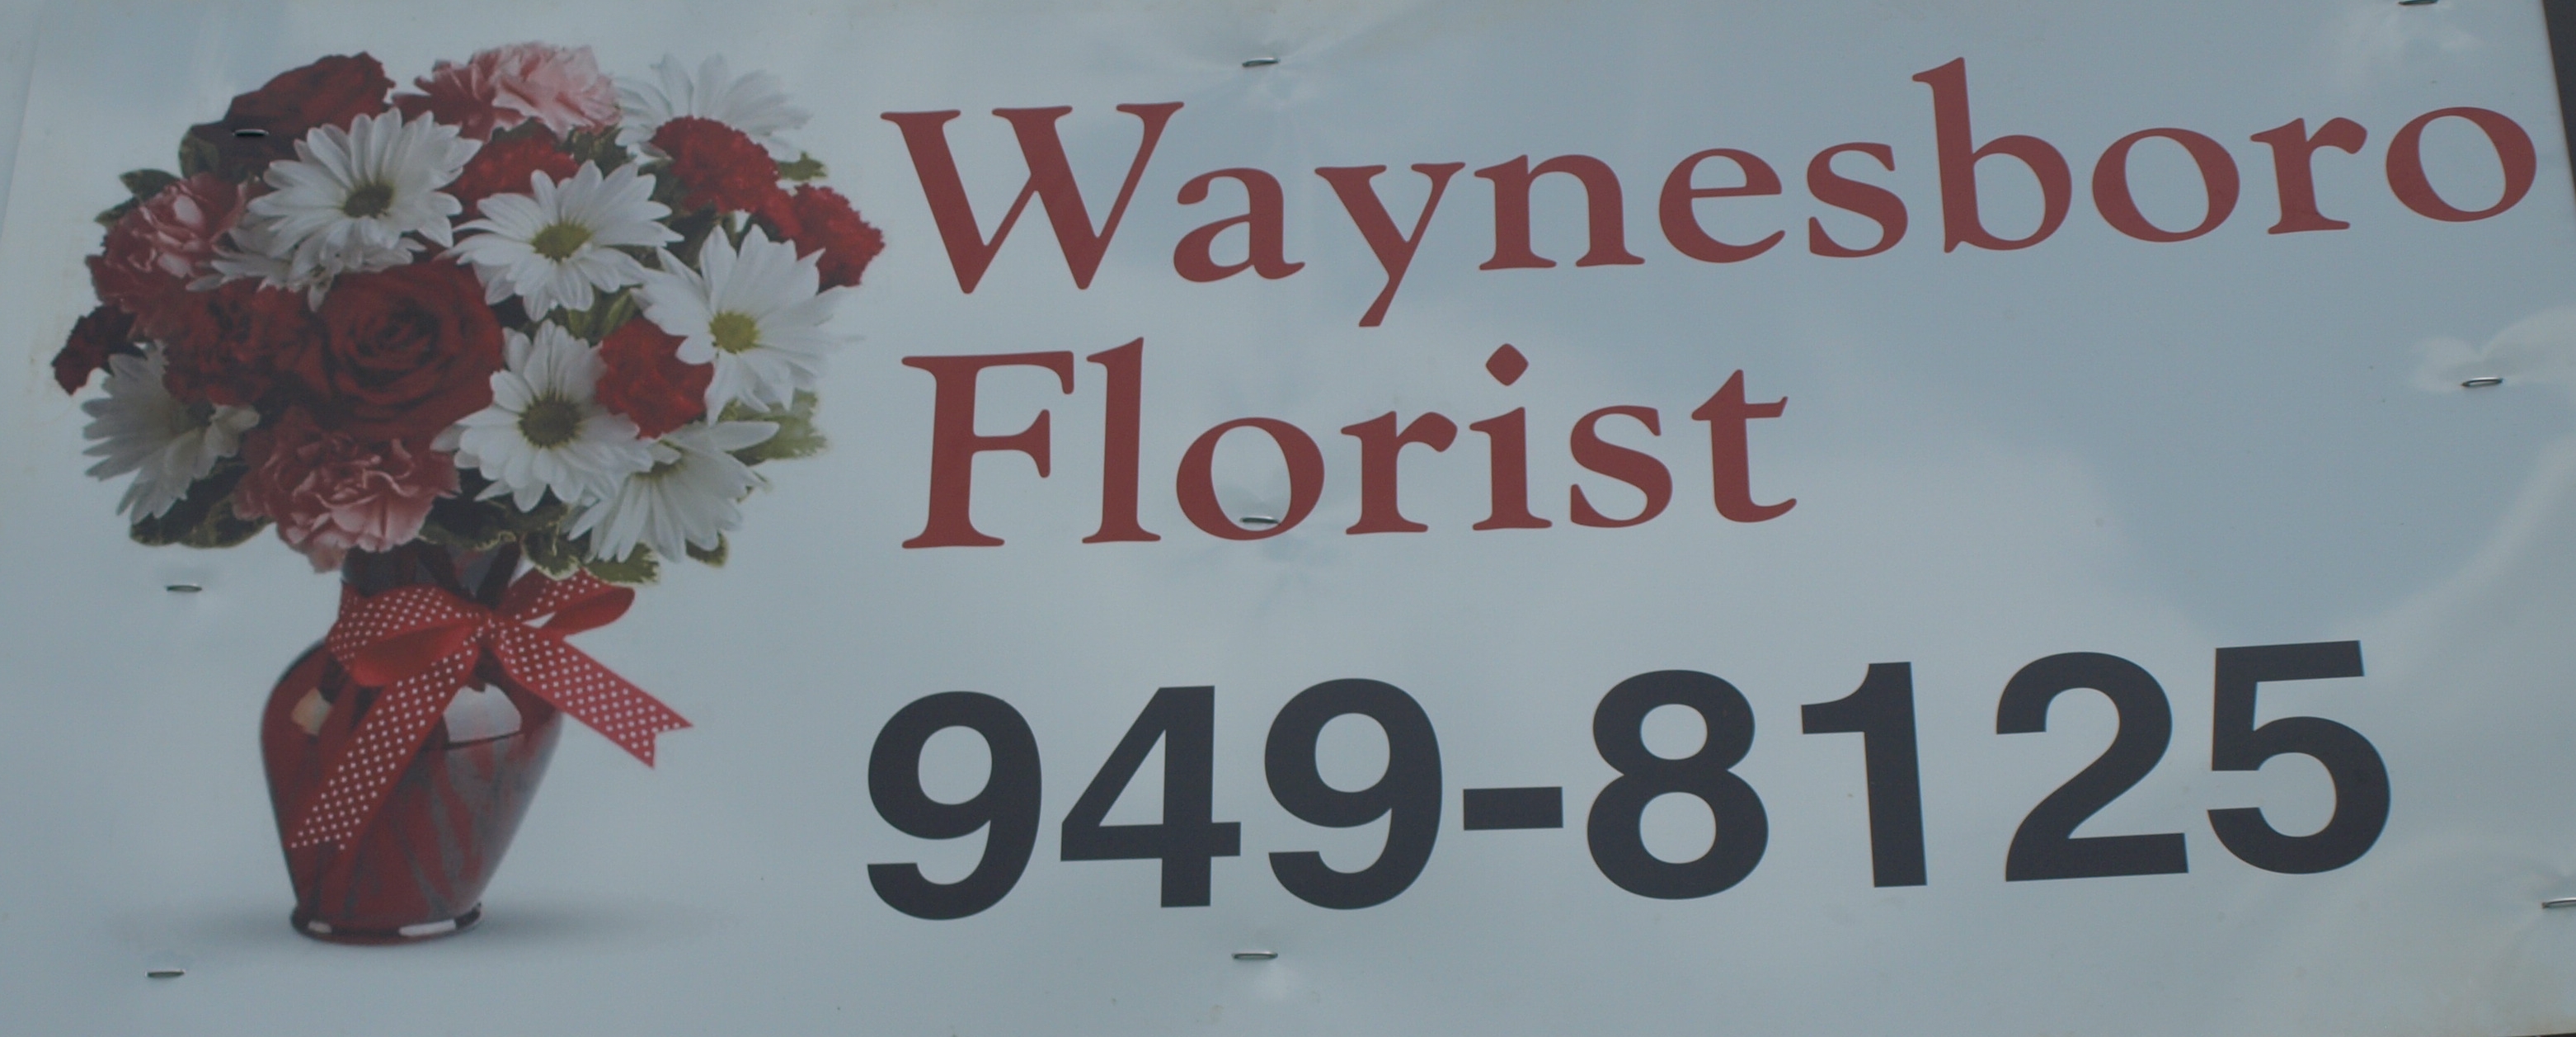 Waynesboro Florist